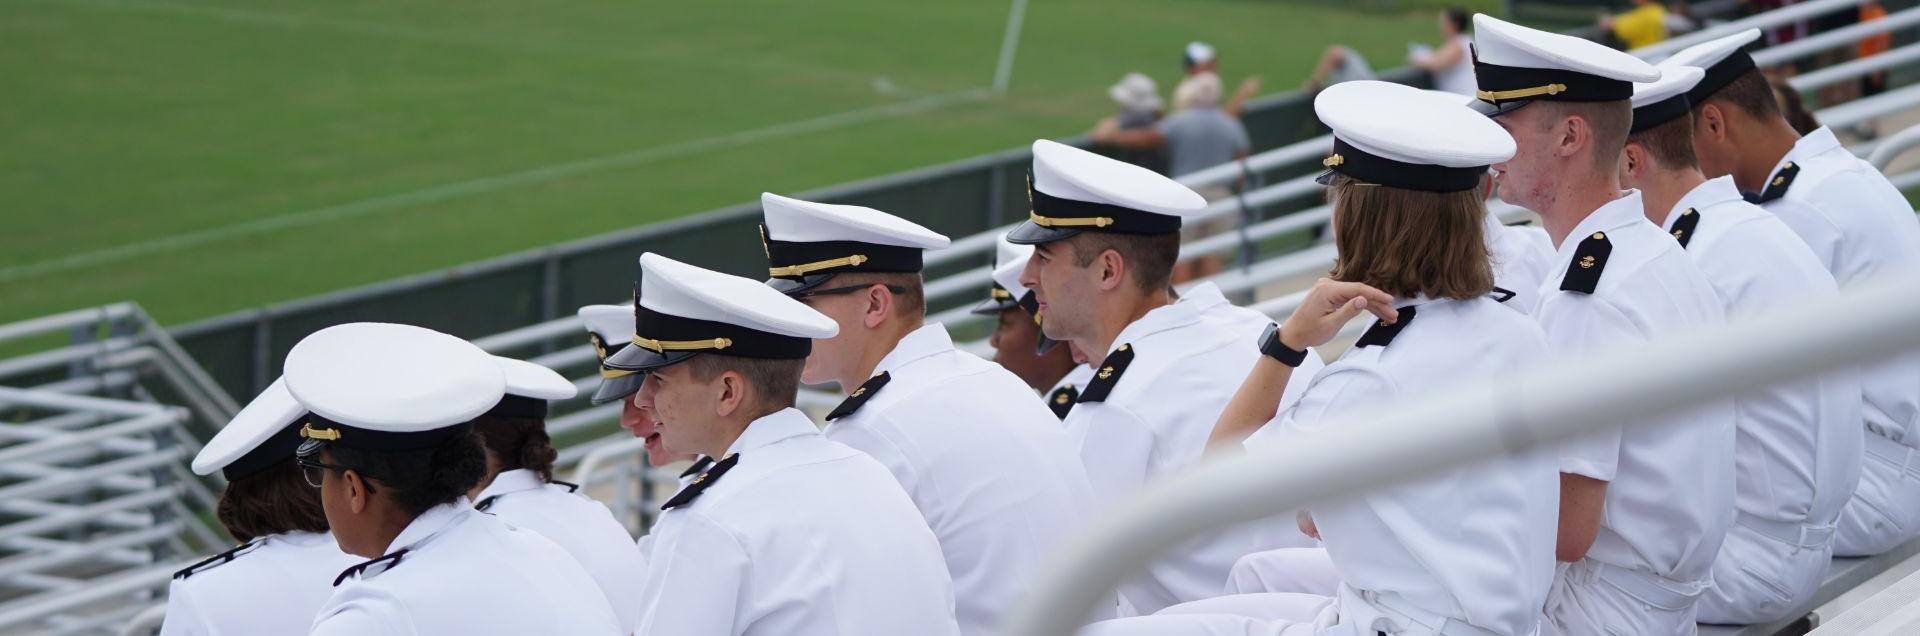 How the U.S. Navy Increased User Satisfaction of their Career Resources.jpg